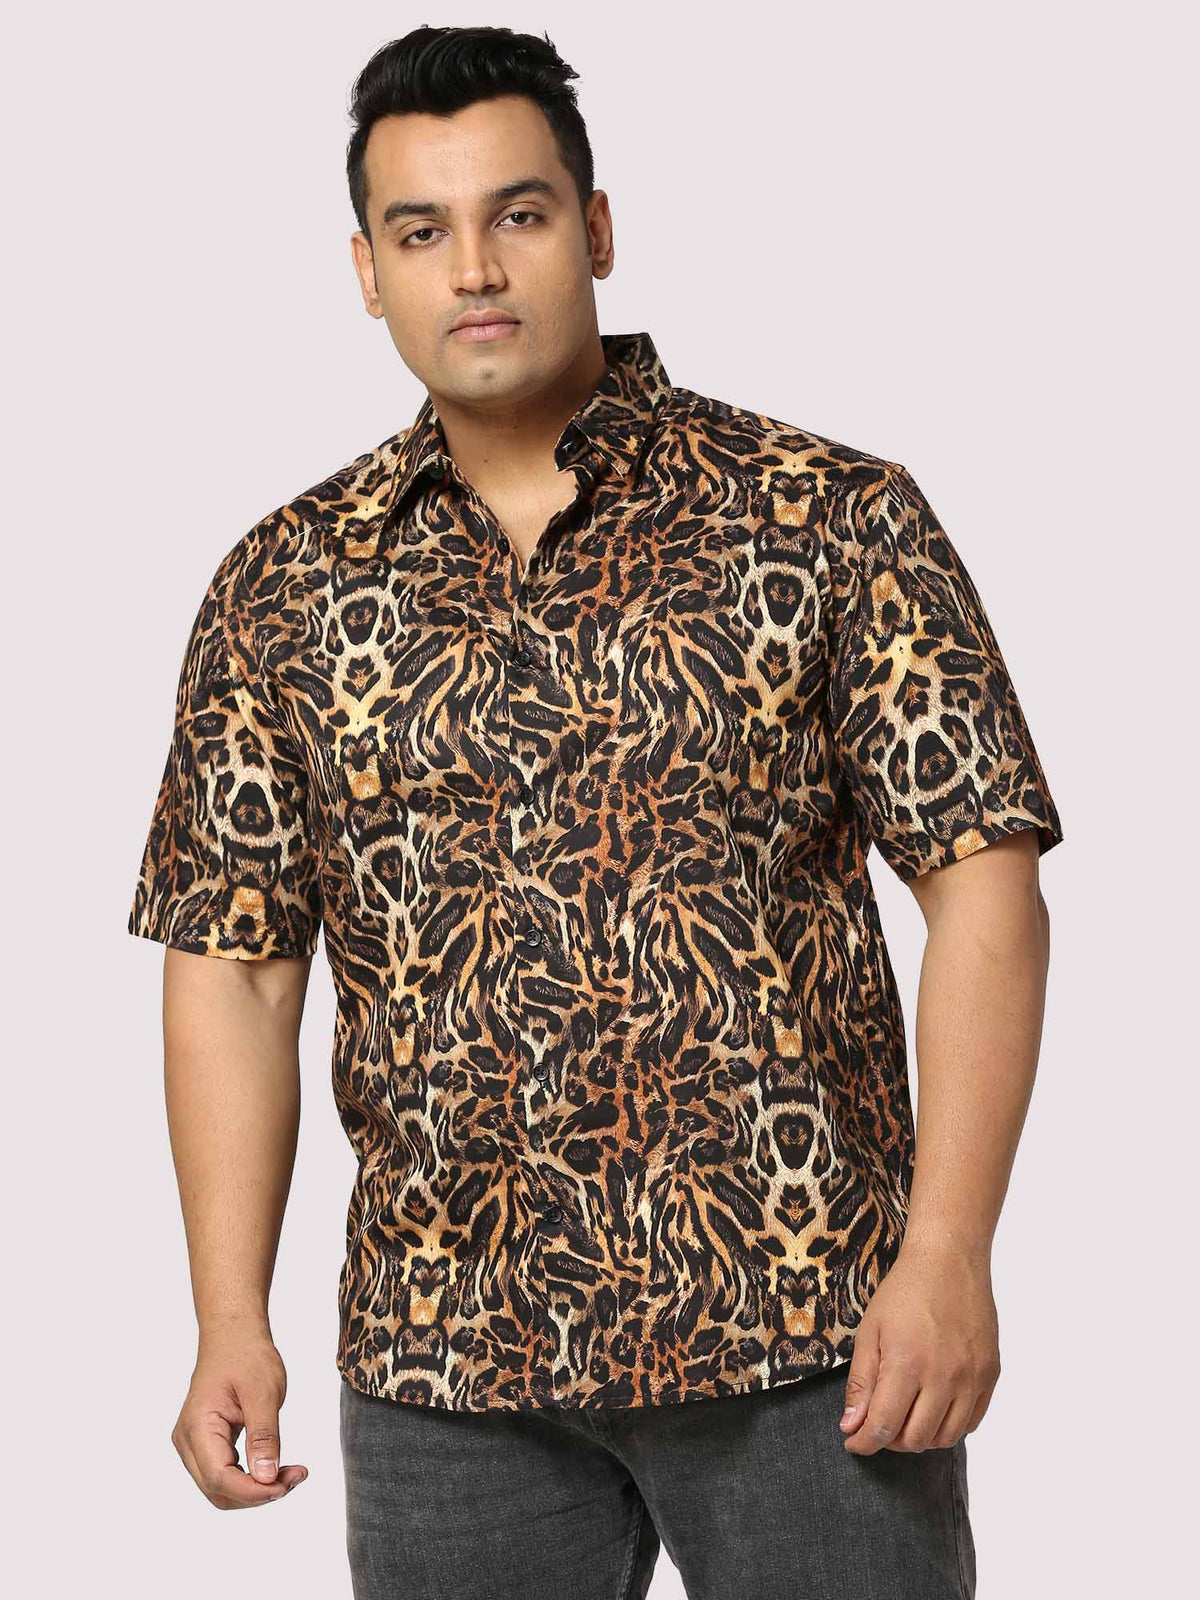 Rage Digital Printed Half Shirt Men's Plus Size - Guniaa Fashions